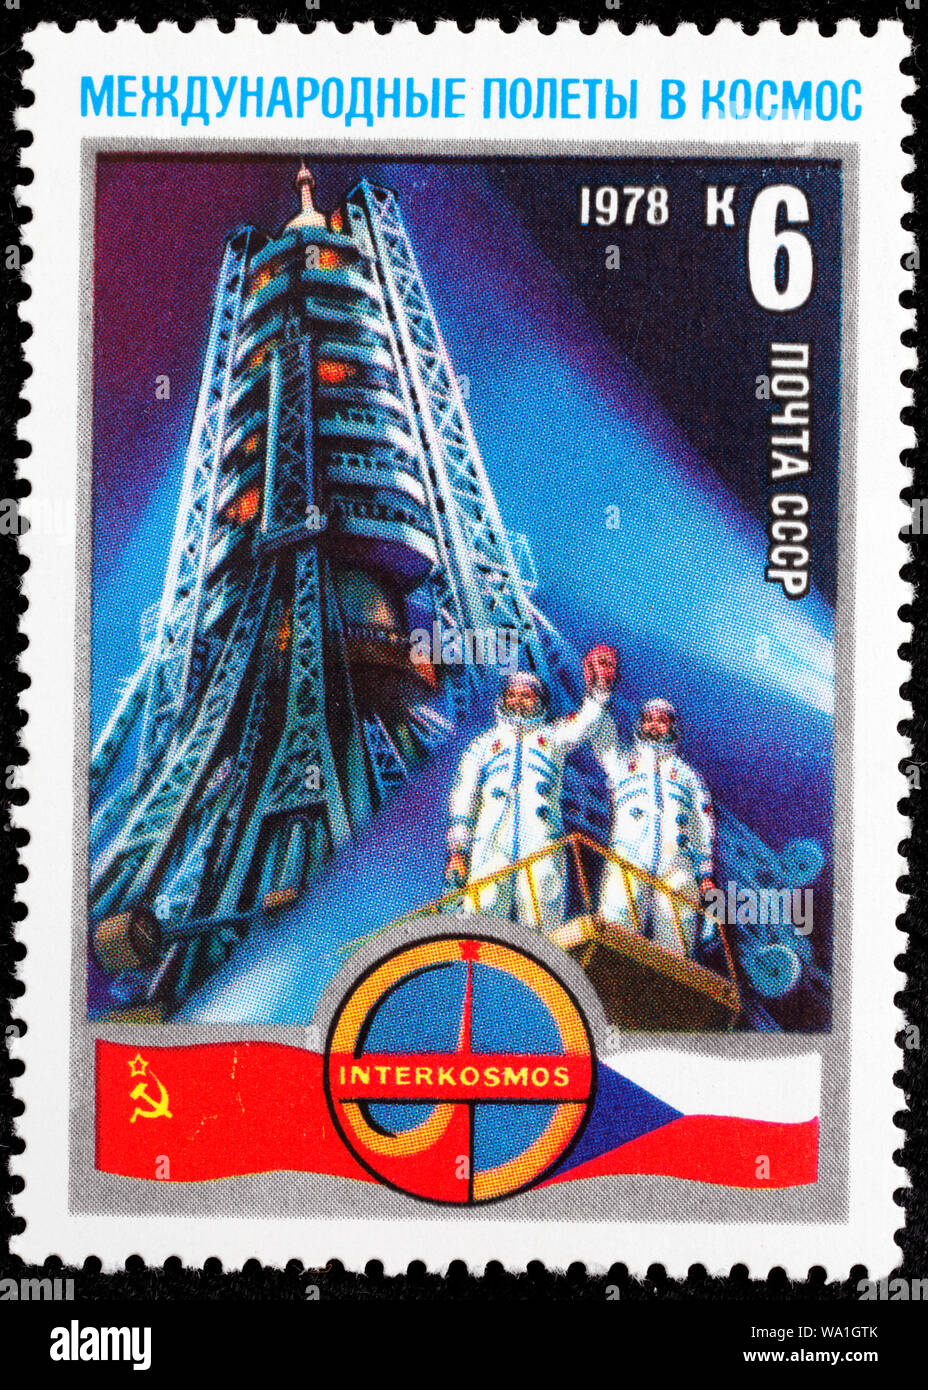 Intercosmos Space Program, Soviet-Czech Space Flight, Gubarev, Remek, postage stamp, Russia, USSR, 1978 Stock Photo